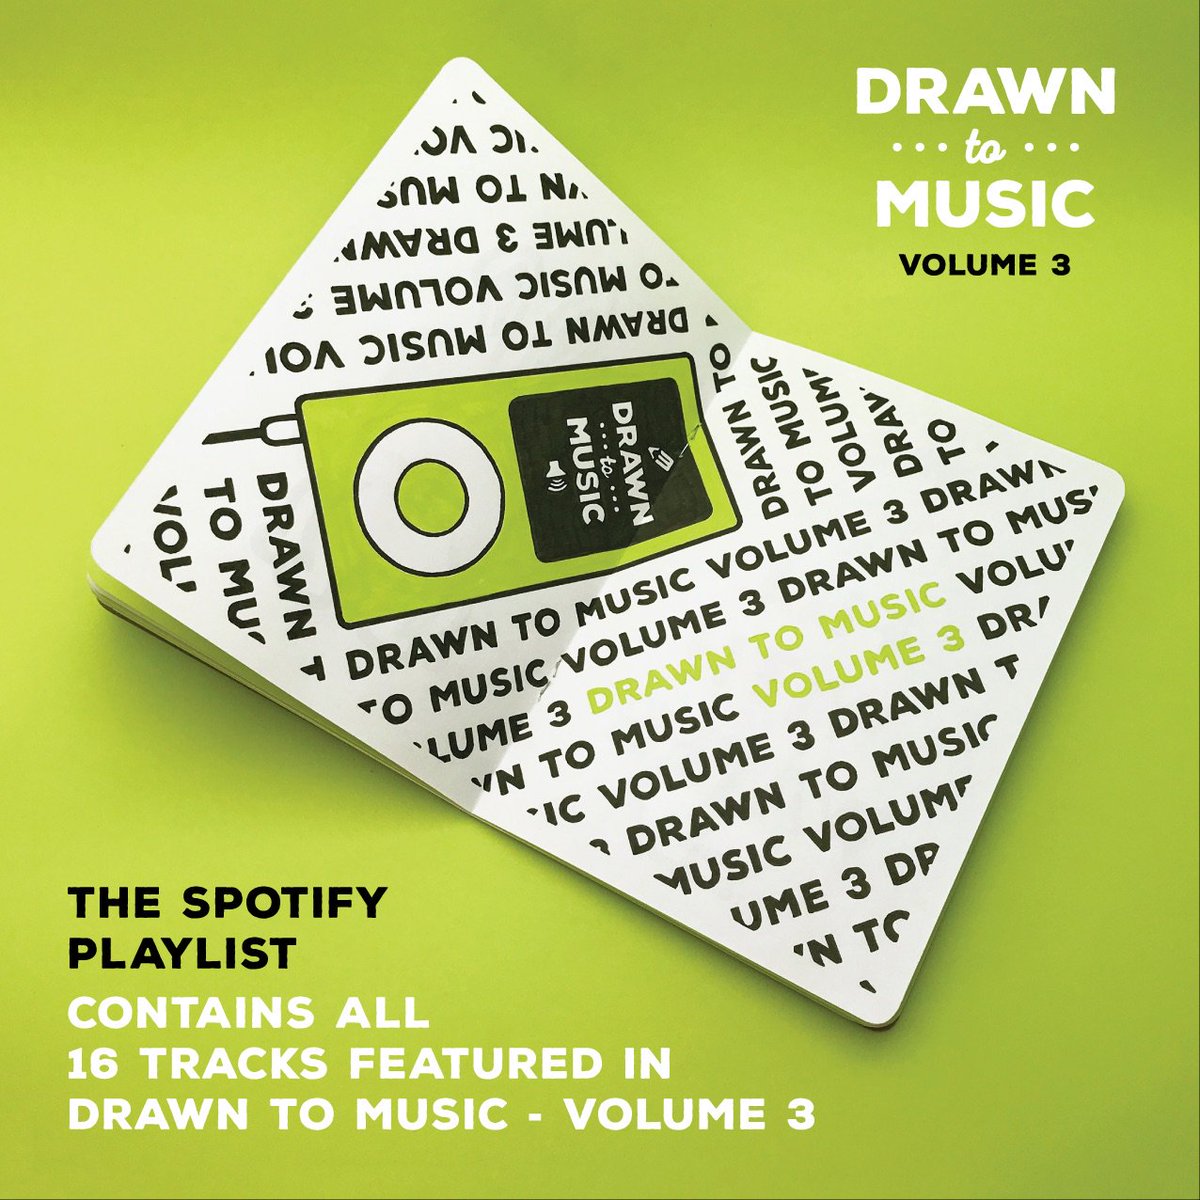 Drawn to Music - Volume 3 : The Spotify Playlist #sketchbookproject2019 #drawntomusicvol3 #S218500 #blackwhiteandgreen #spotify #playlist

tinyurl.com/y6o3ah5g